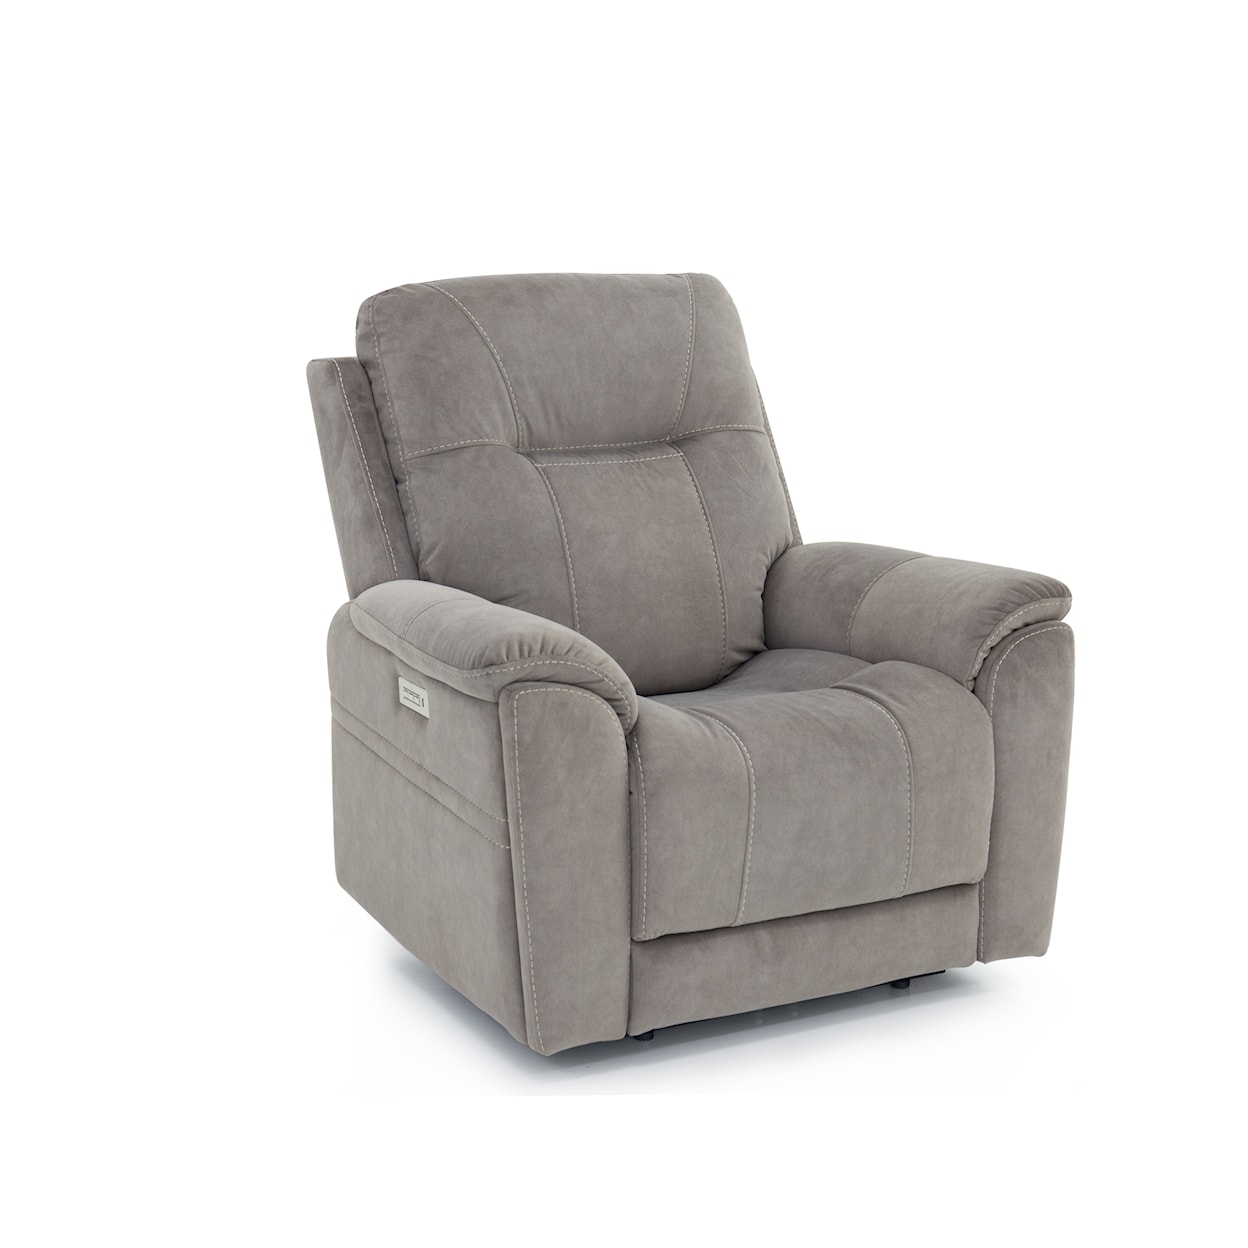 Warehouse M 806 Recliner chair